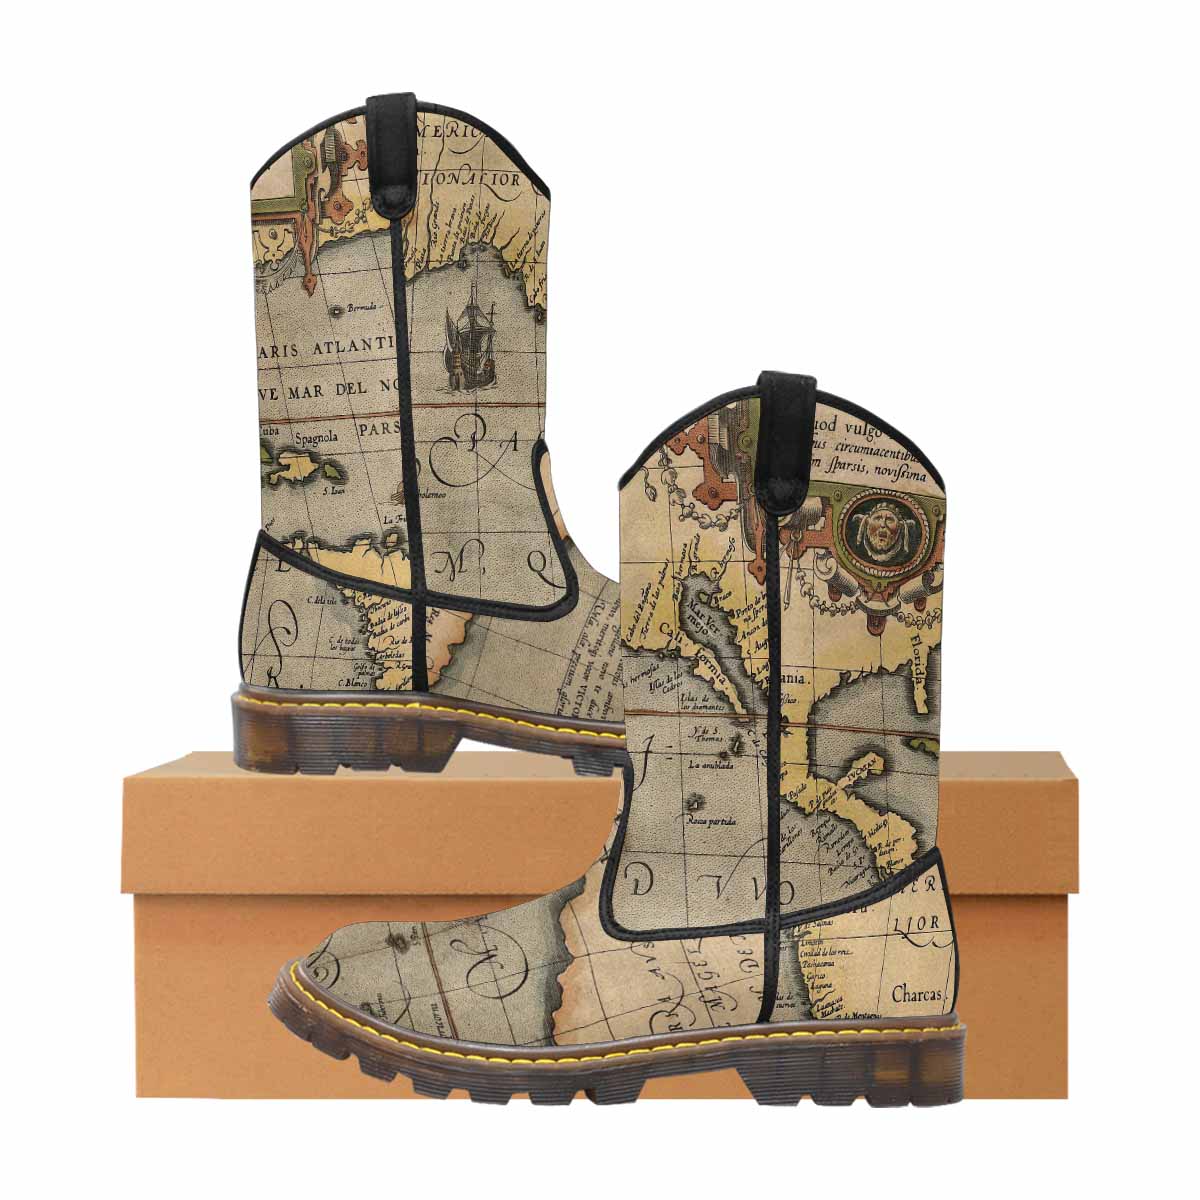 Antique Map design mens western lumber boots, Design 46